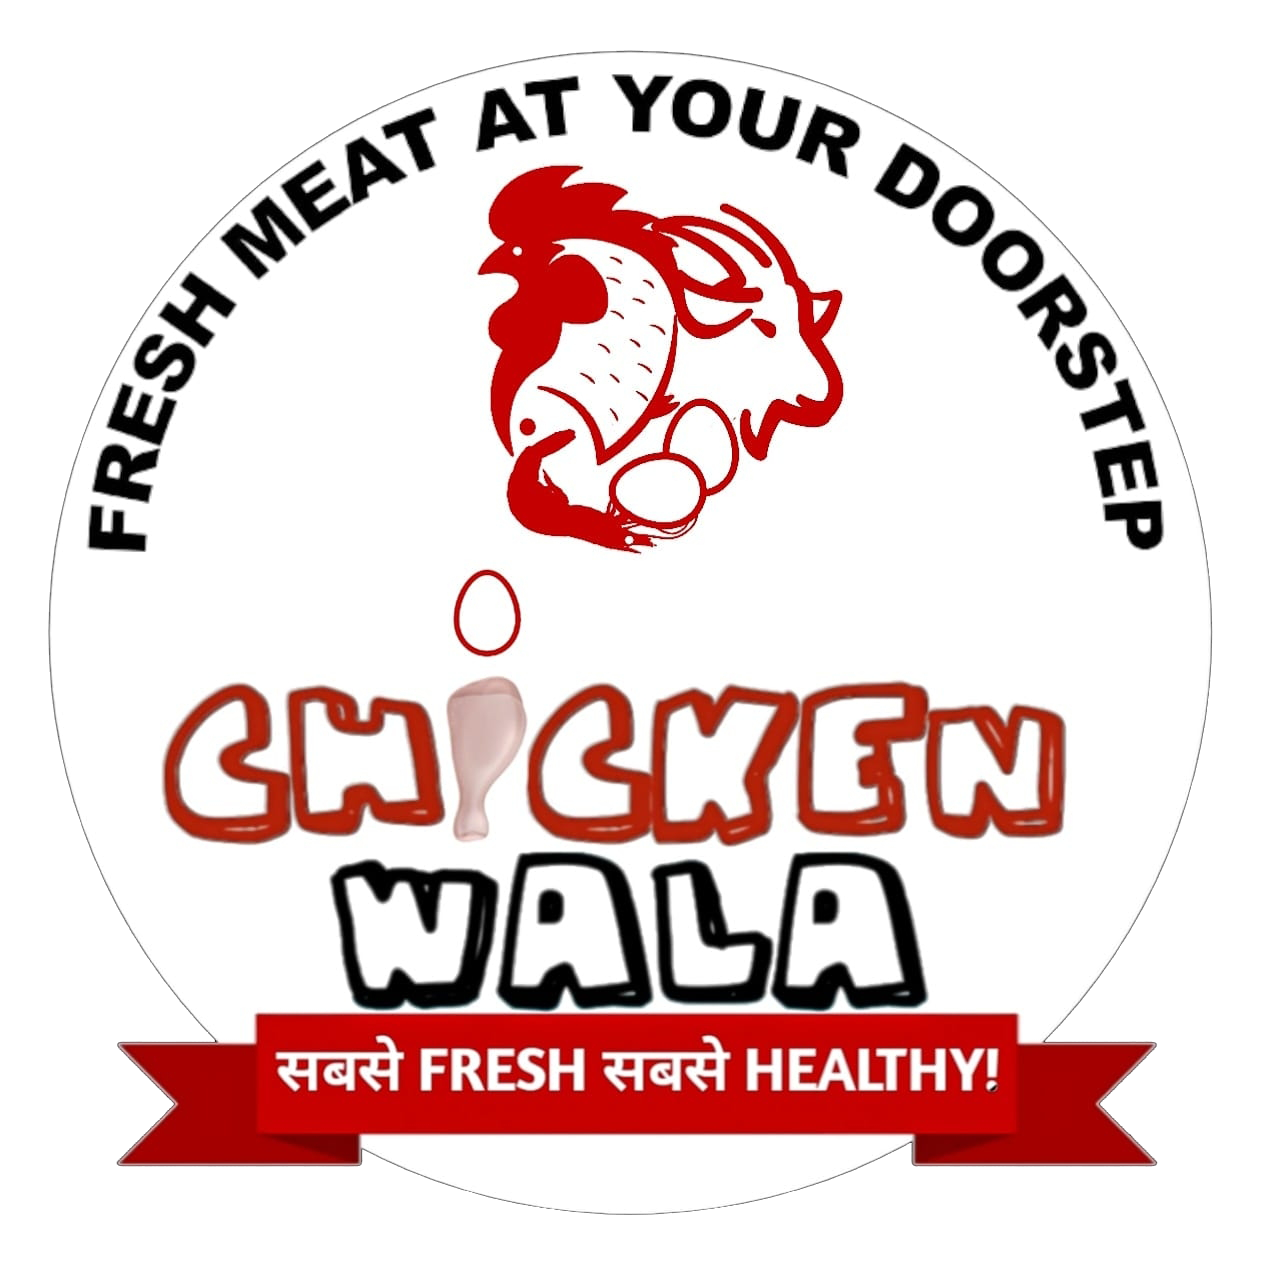 logo-chickenwala